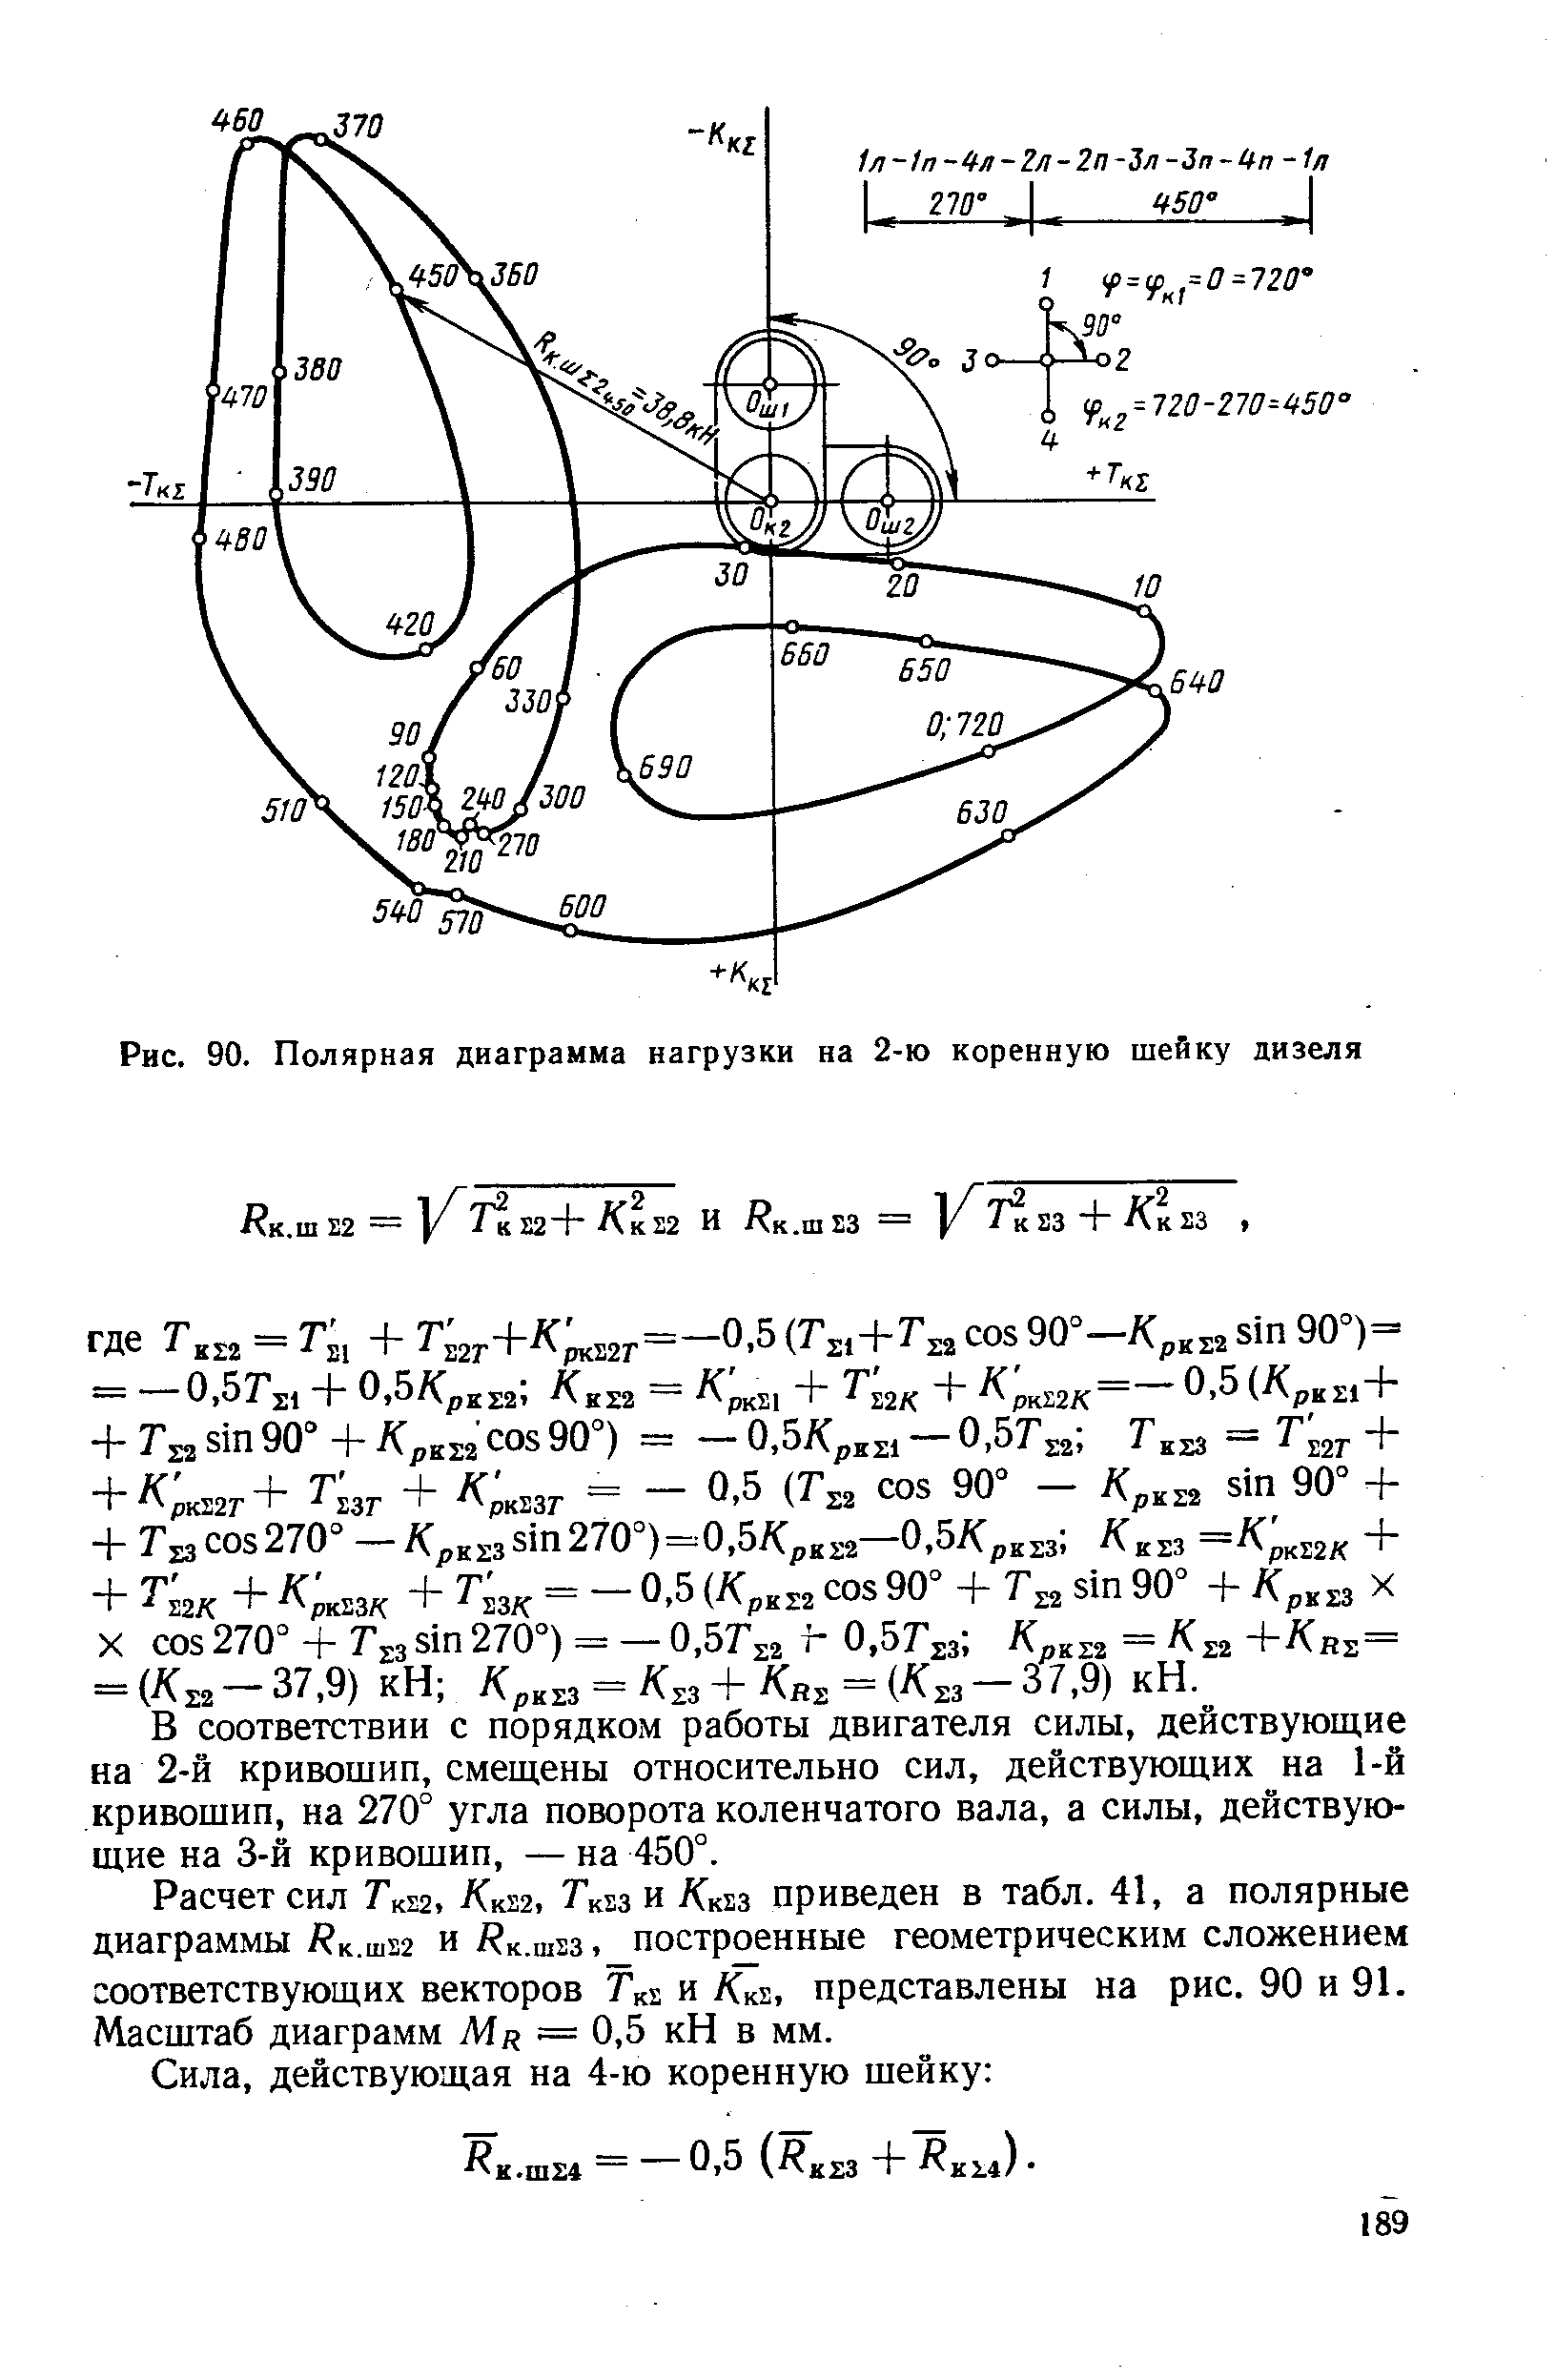 Рис. 90. Полярная диаграмма нагрузки на 2-ю <a href="/info/167160">коренную шейку</a> дизеля
